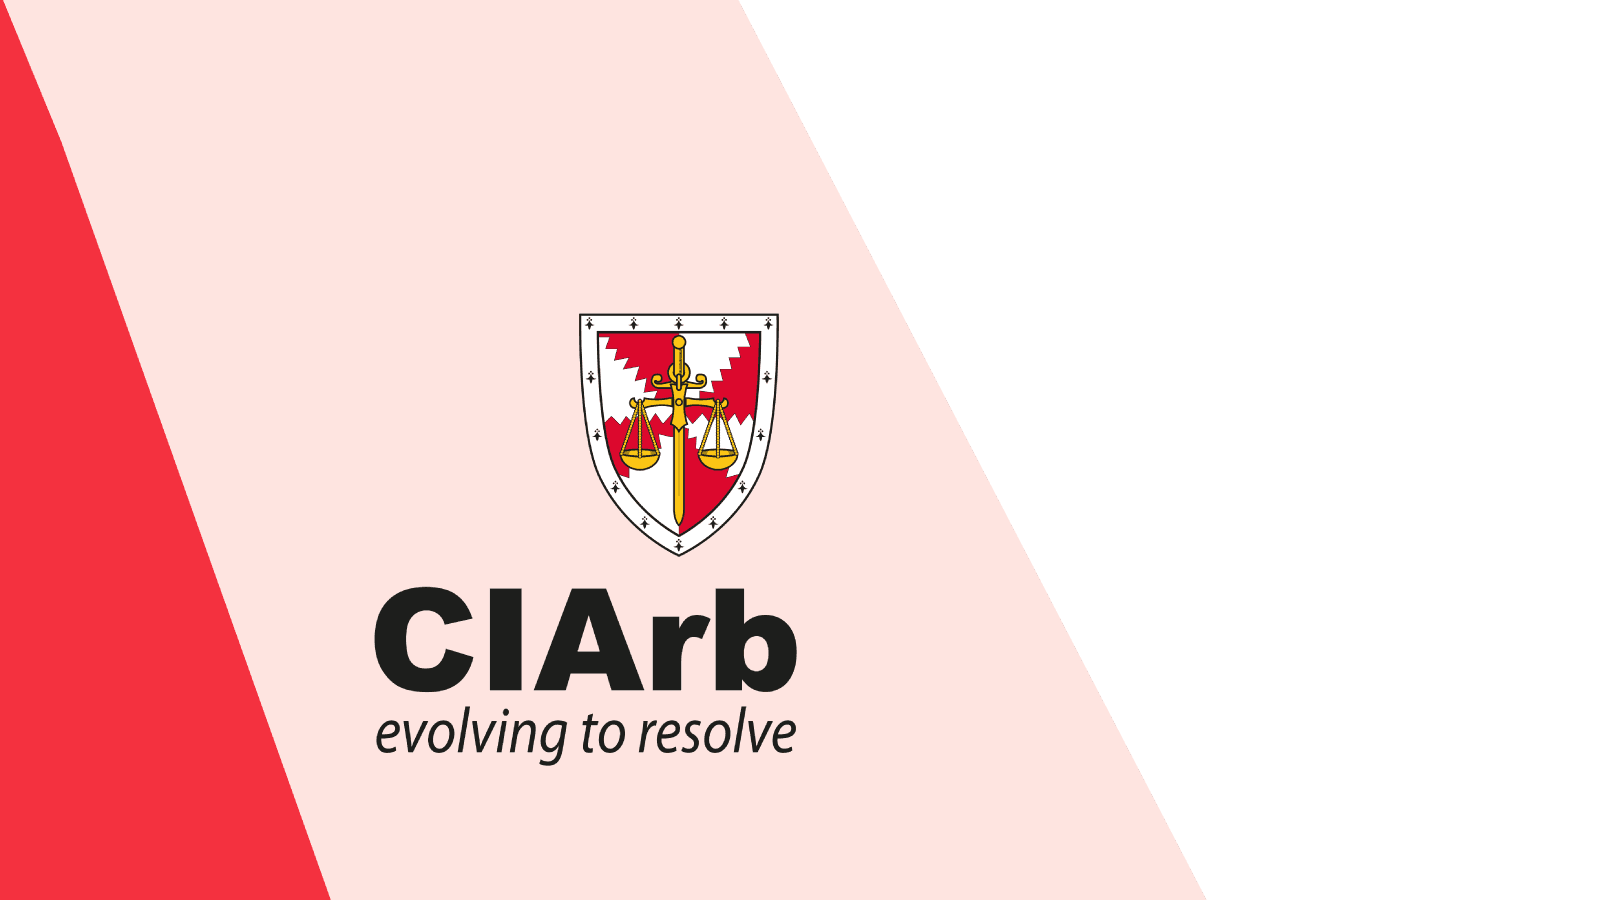 CIArb - Evolving to resolve